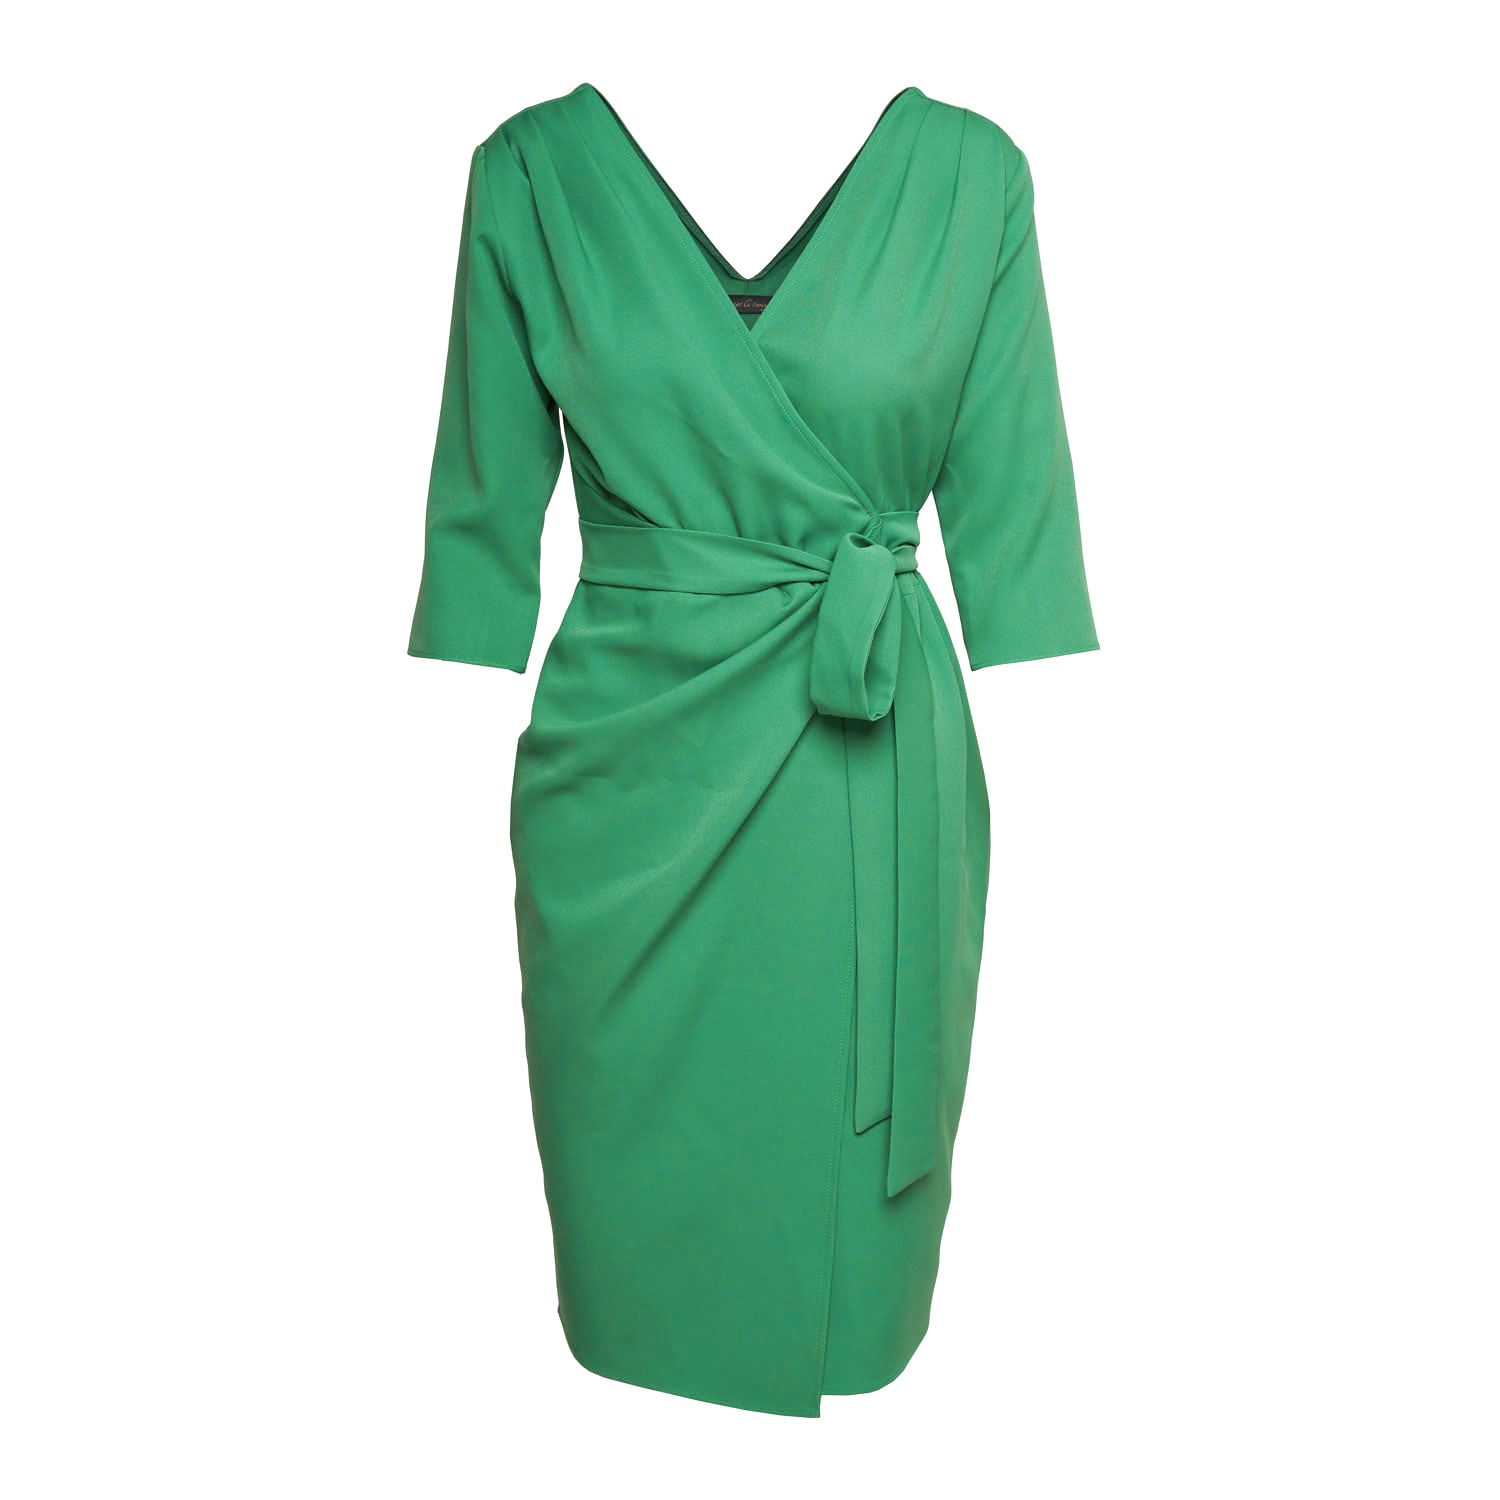 Women’s Wrap Three Quarter Length Sleeve Green Dress M/L Concept a Trois